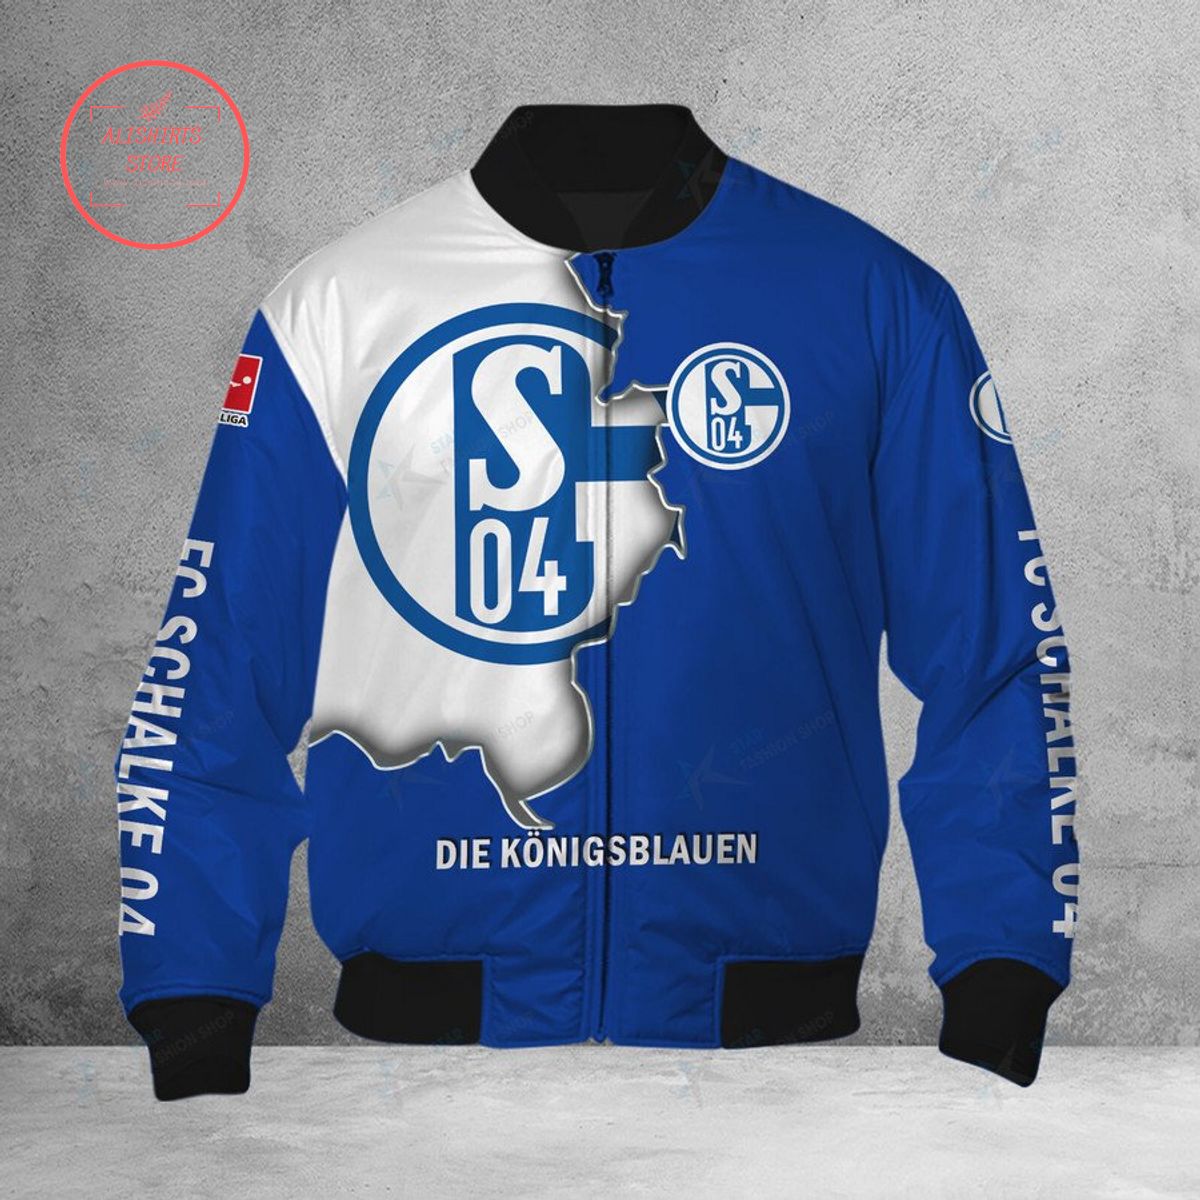 Schalke 04 Bomber Jacket